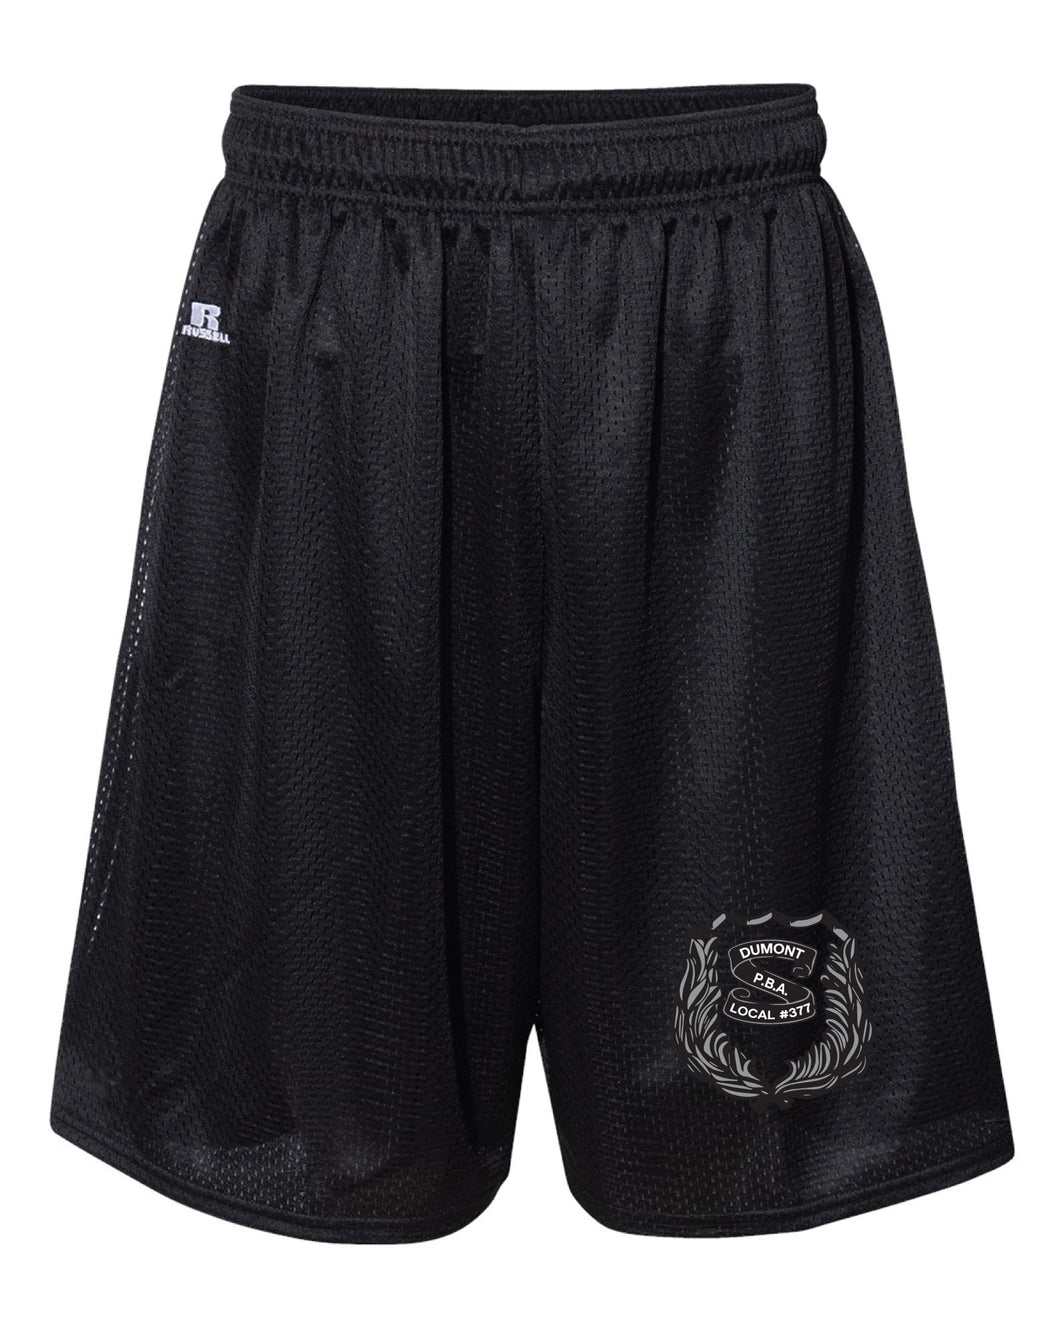 Dumont Police Russell Athletic Tech Shorts - Black (Design 1) - 5KounT